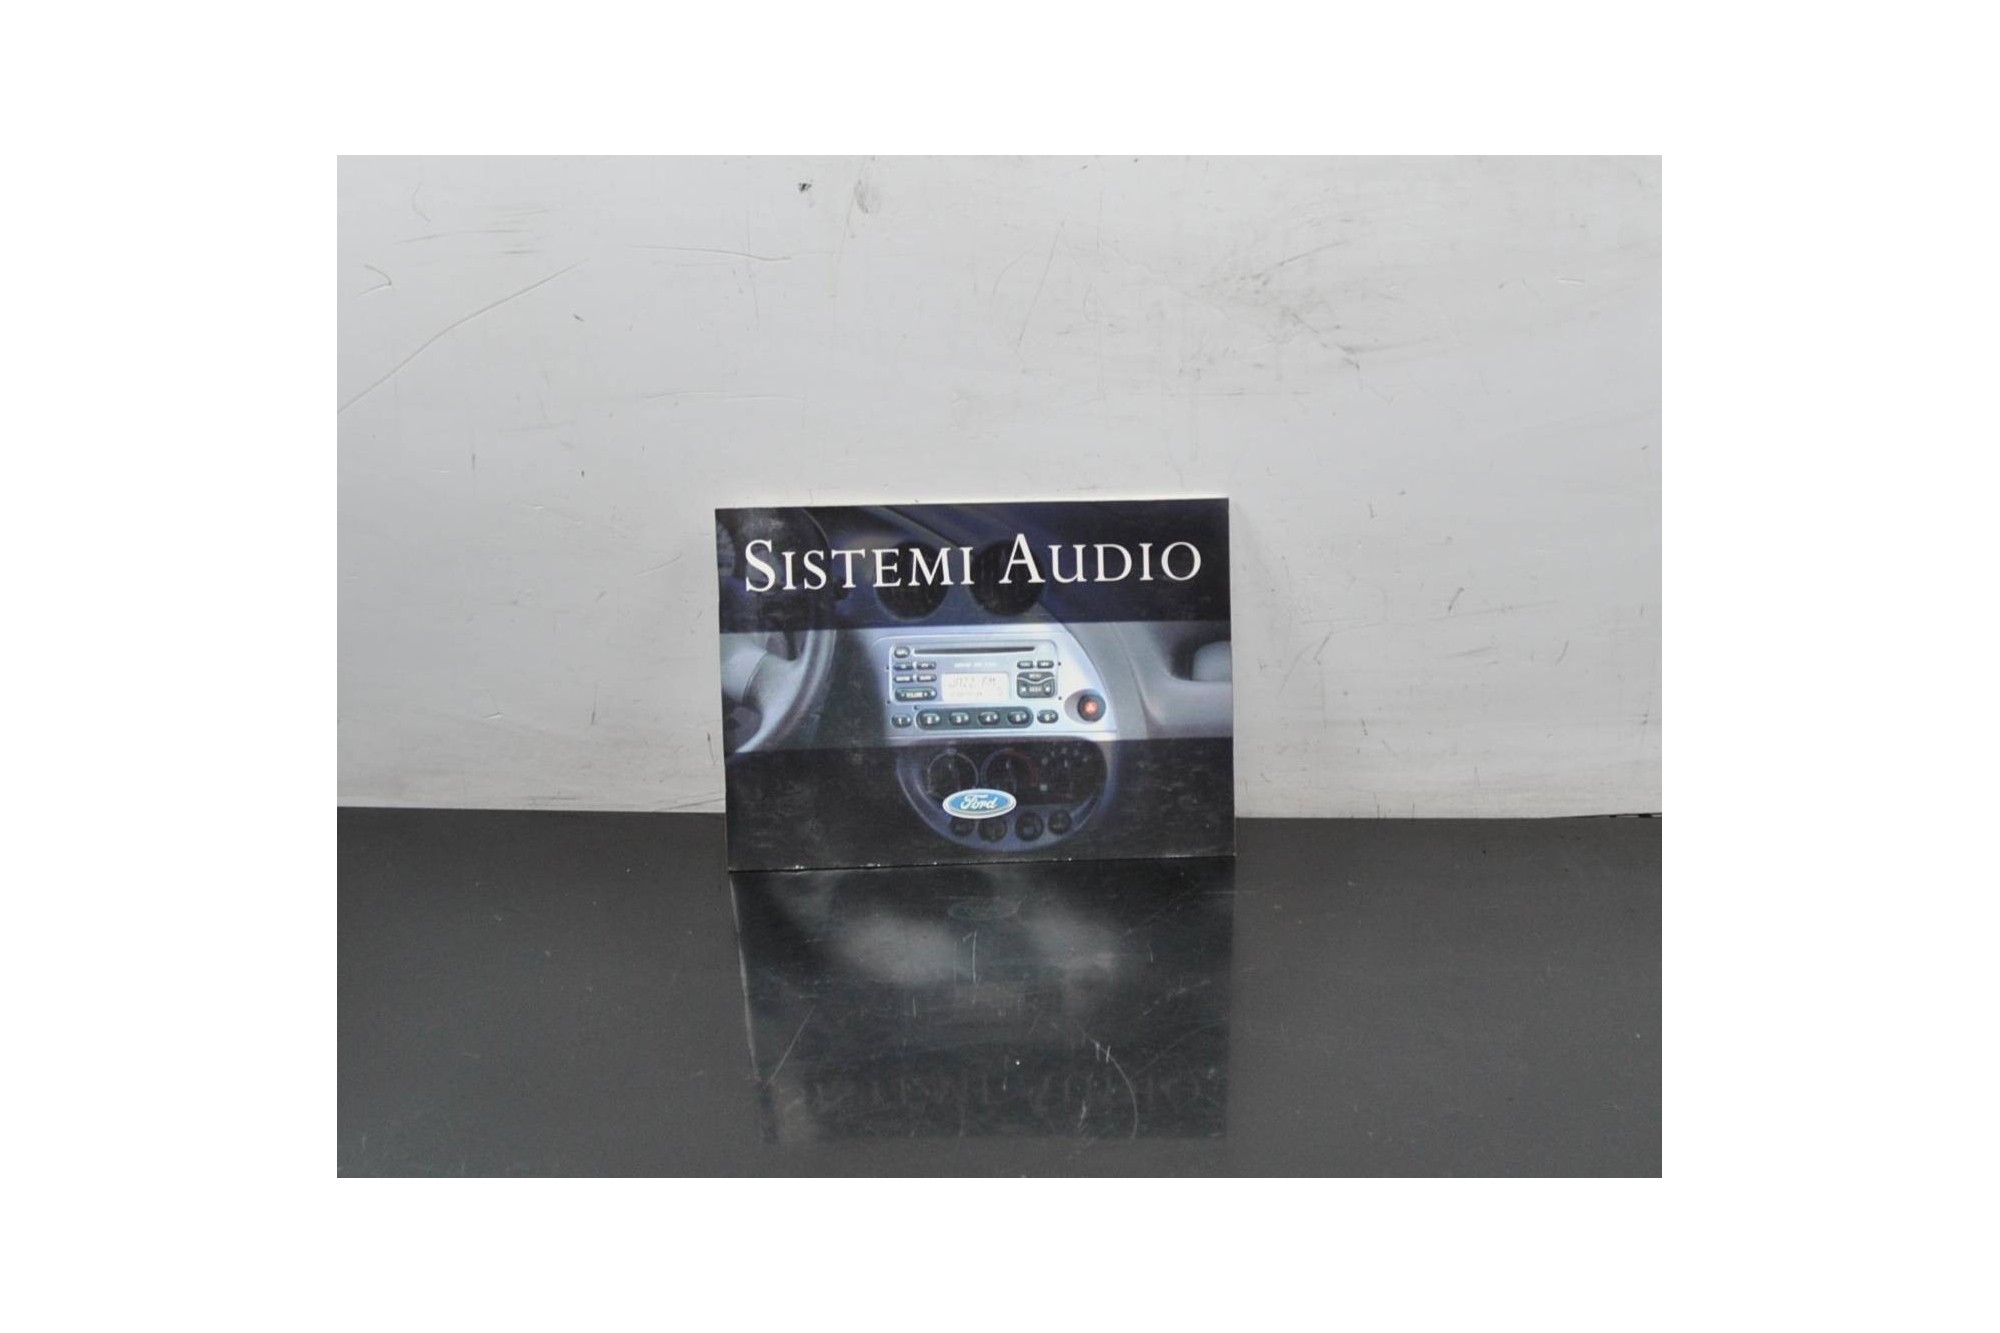 Manuale catalogo Sistemi Audio Ford Fiesta IV dal 1995 al 2002  2400000069973